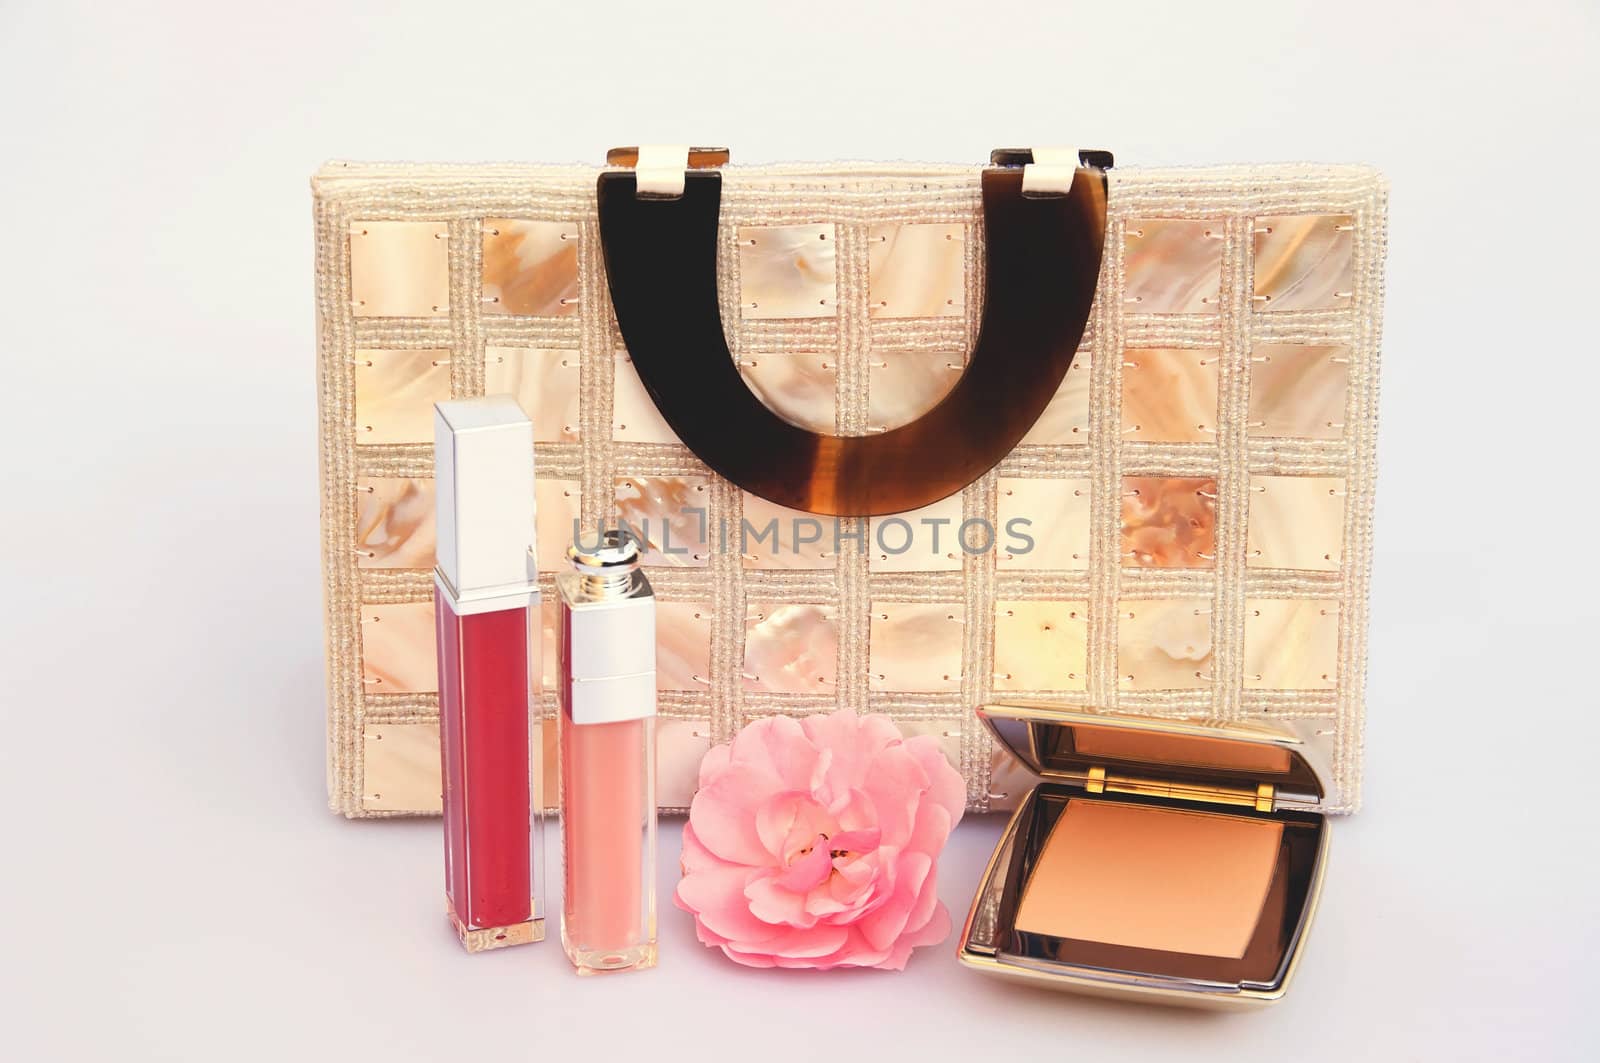 A female handbag that displays the contents